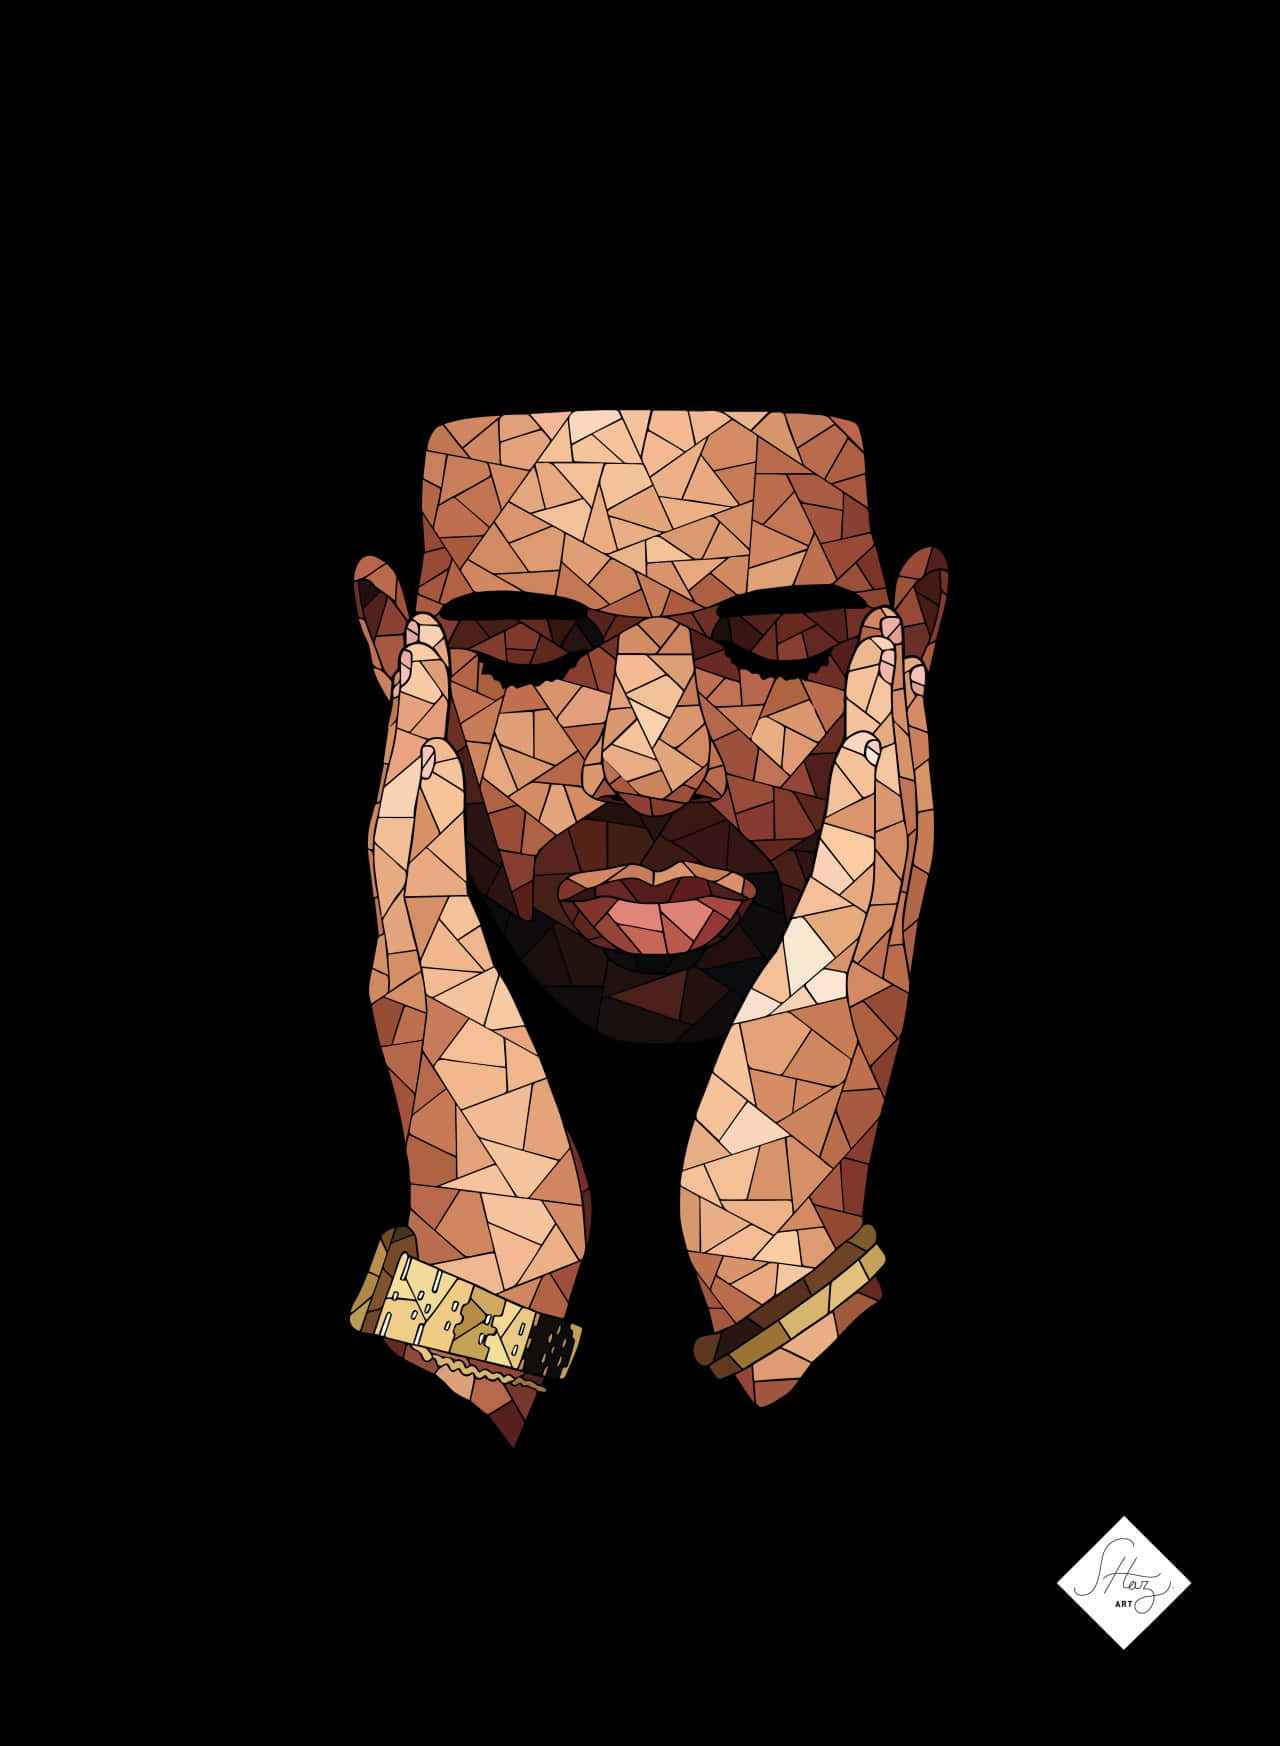 Drake'salbumcover Von 